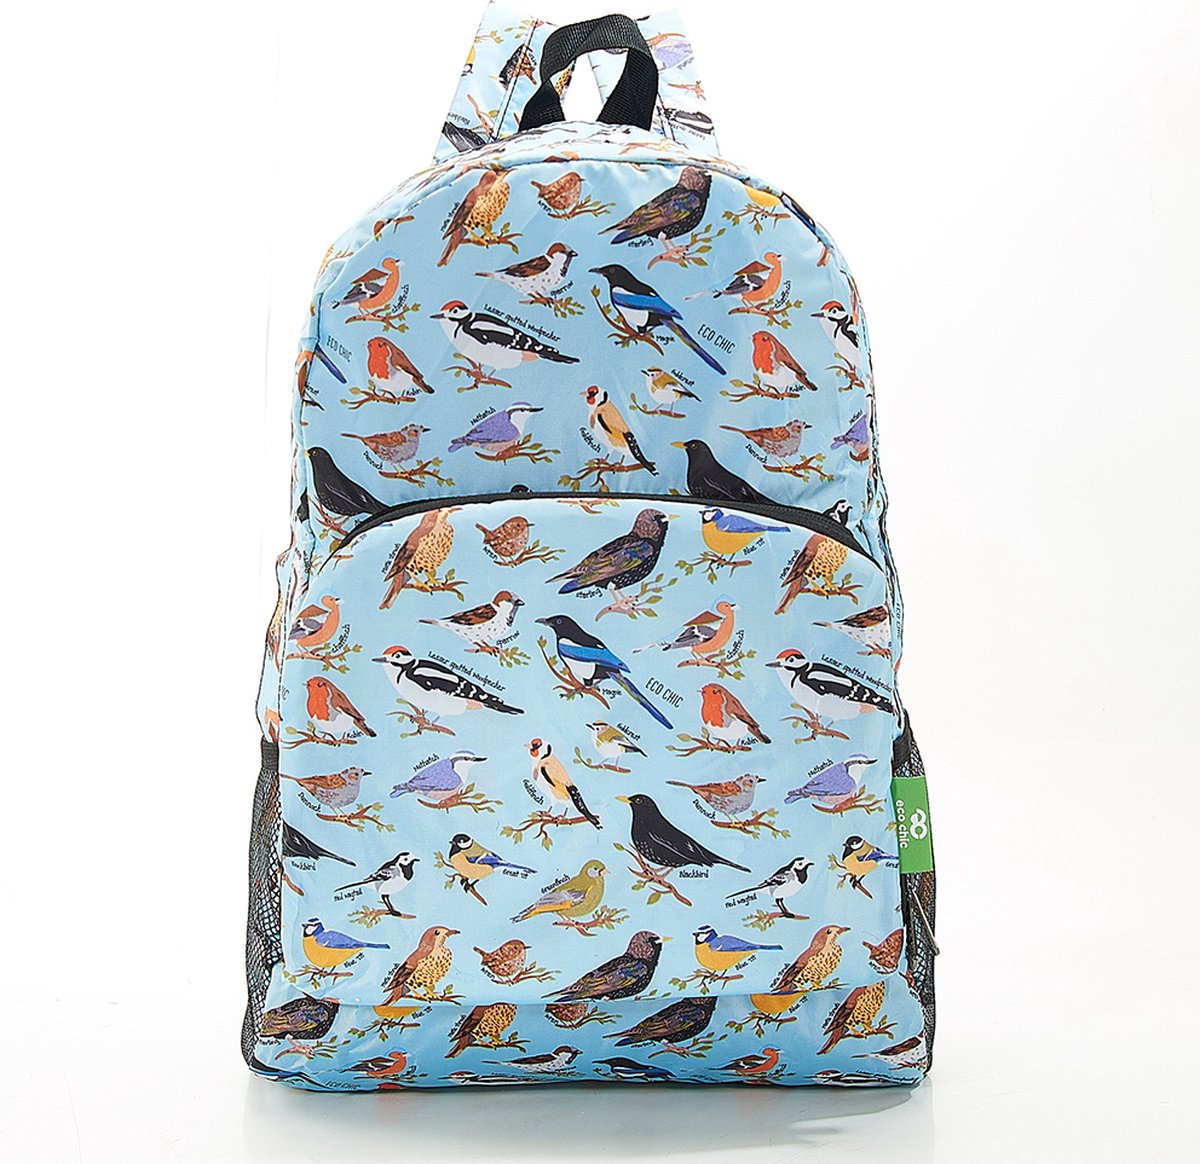 Eco Chic - Backpack - B16BU - Blue - Wild Birds